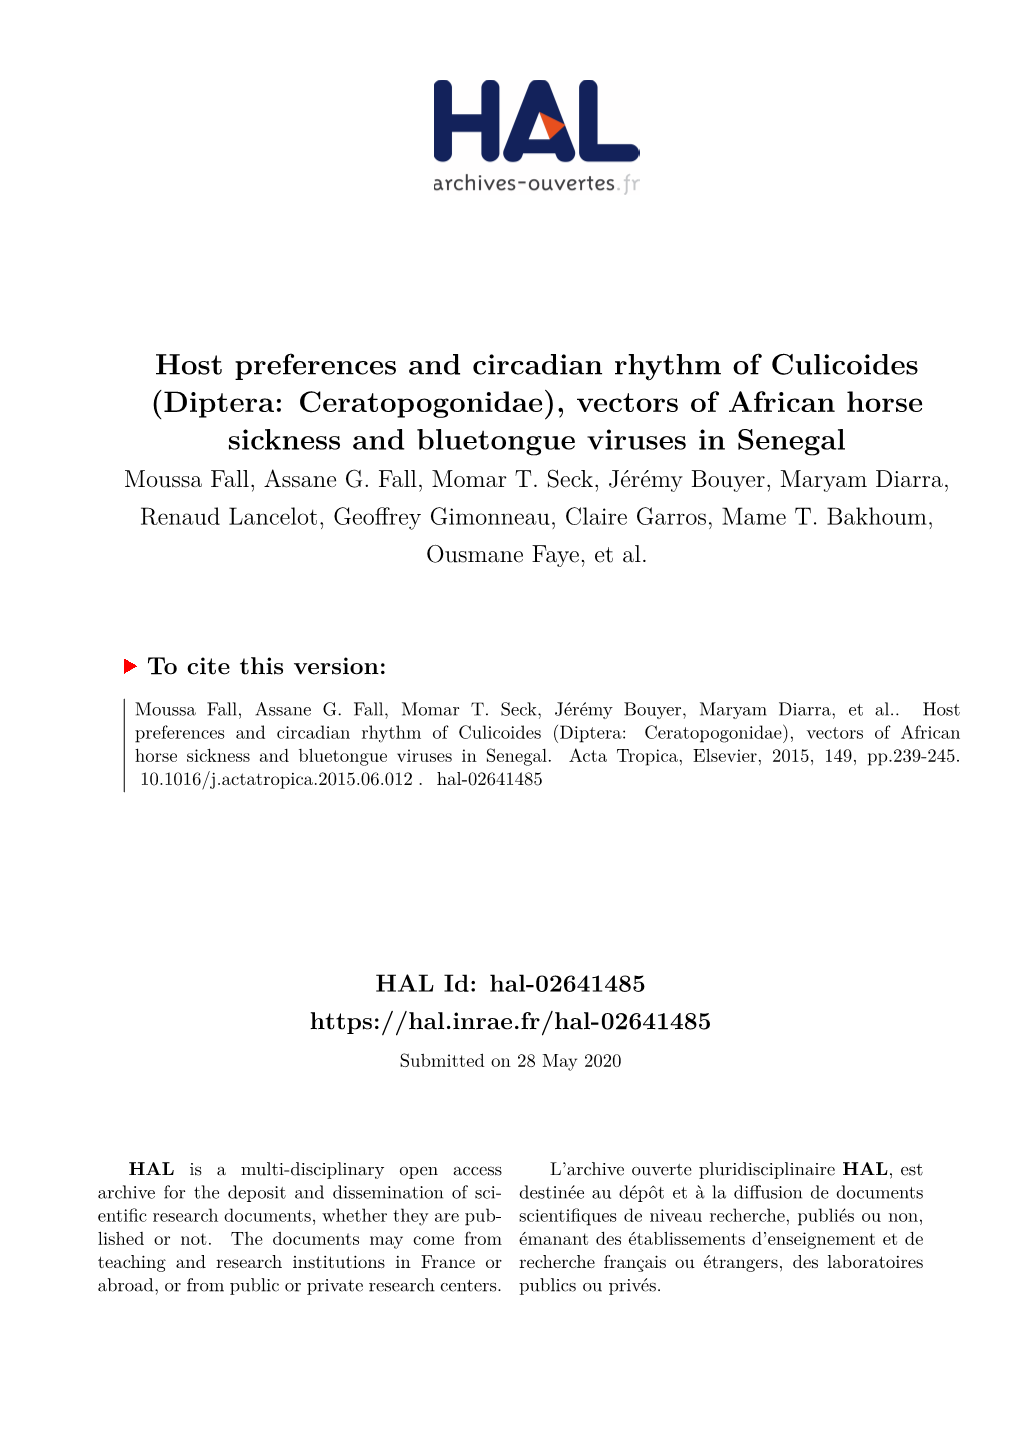 Diptera: Ceratopogonidae), Vectors of African Horse Sickness and Bluetongue Viruses in Senegal Moussa Fall, Assane G